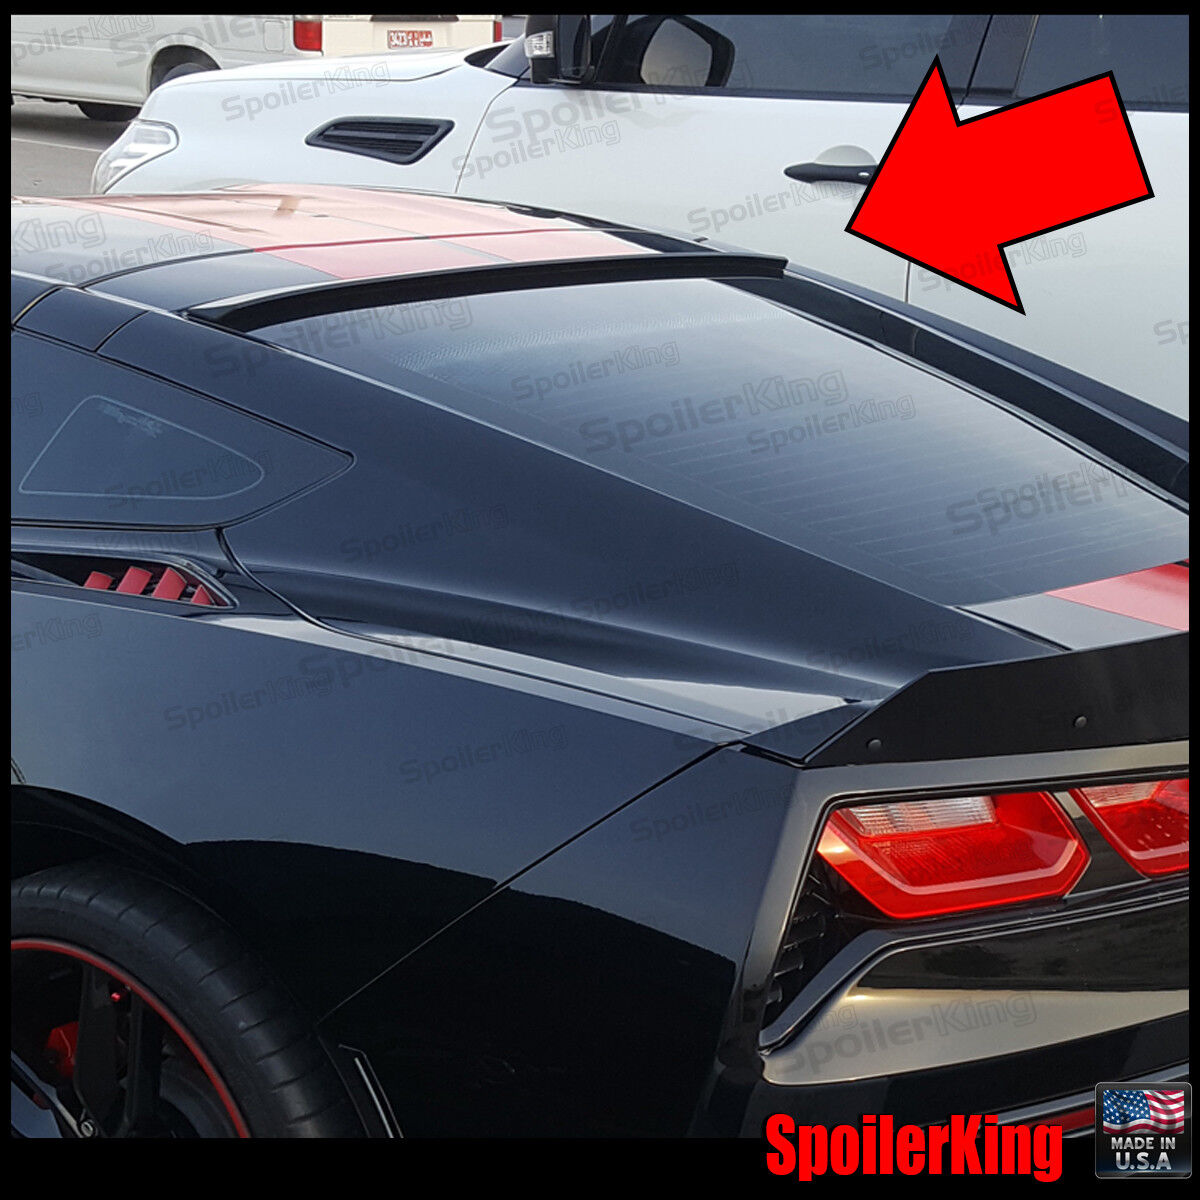 818R StanceNride Rear Roof Spoiler Window Wing (Chevy Corvette 2014-2019 c7)